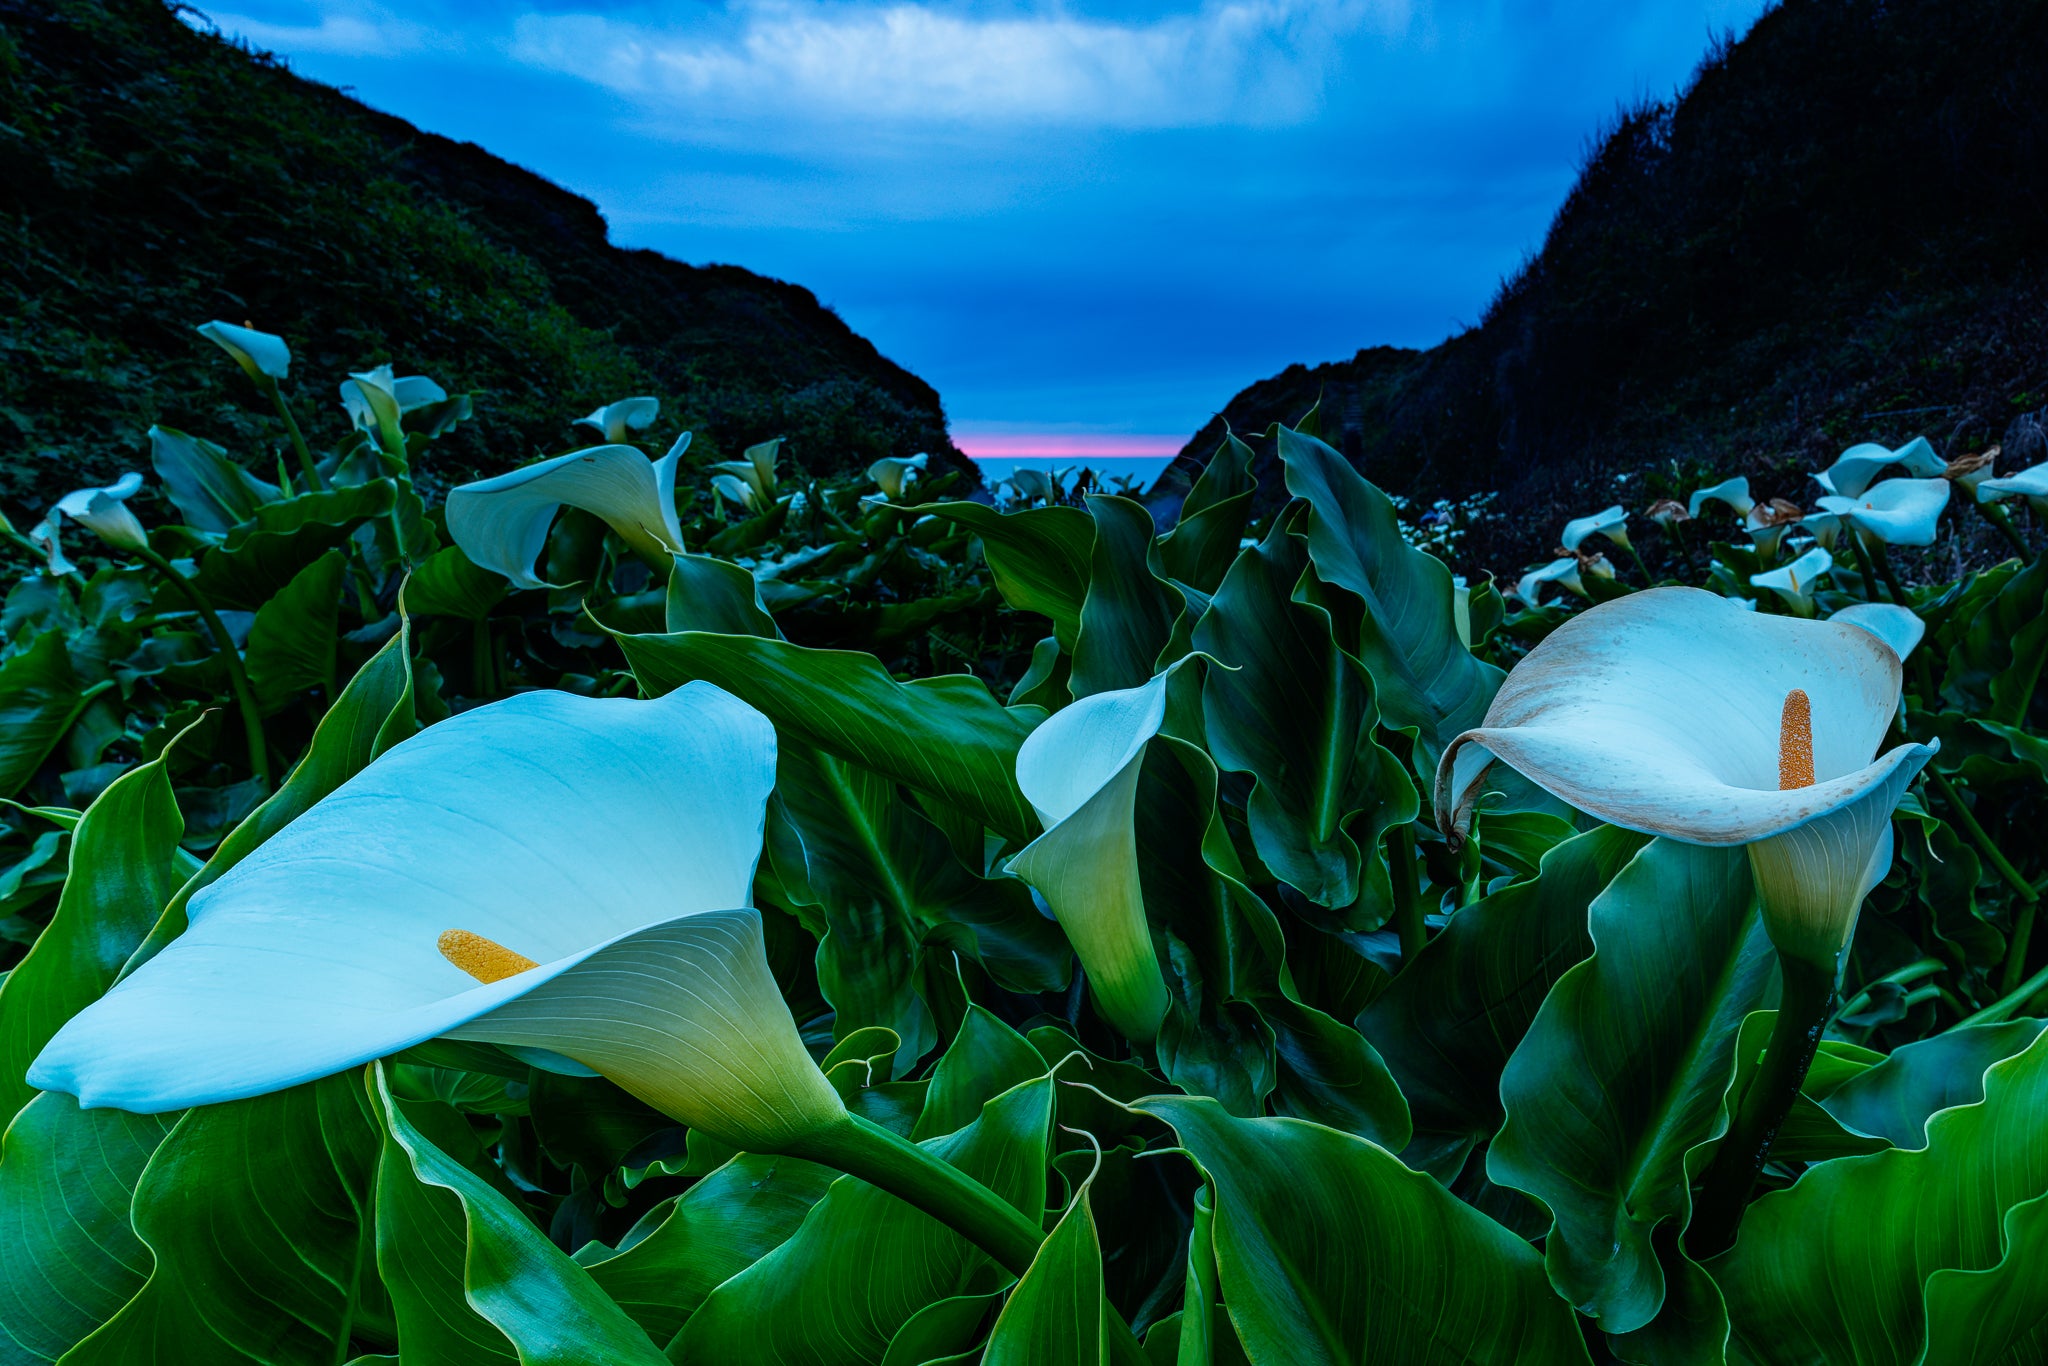 The picture is a fine art landscape photograph titled "Calla Lily Valley" by Cameron Dreaux of Dreaux Fine Art.